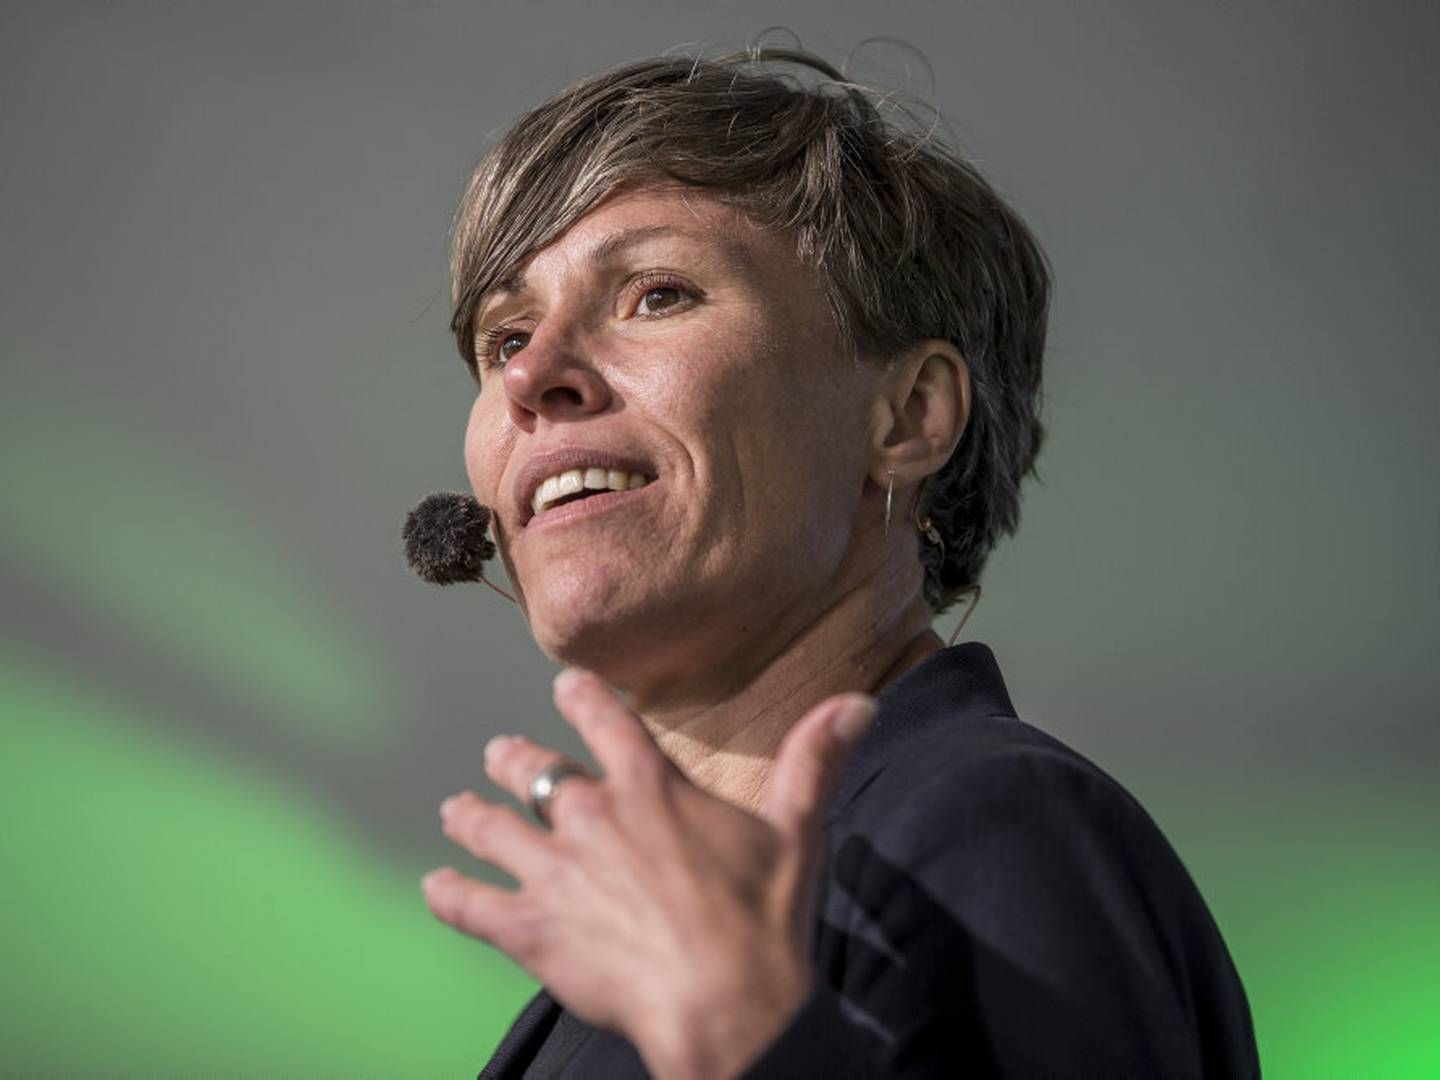 Winni Grosbøll afløser Anja Philip som direktør i Forbrugerrådet Tænk. | Photo: Mads Claus Rasmussen/Ritzau Scanpix